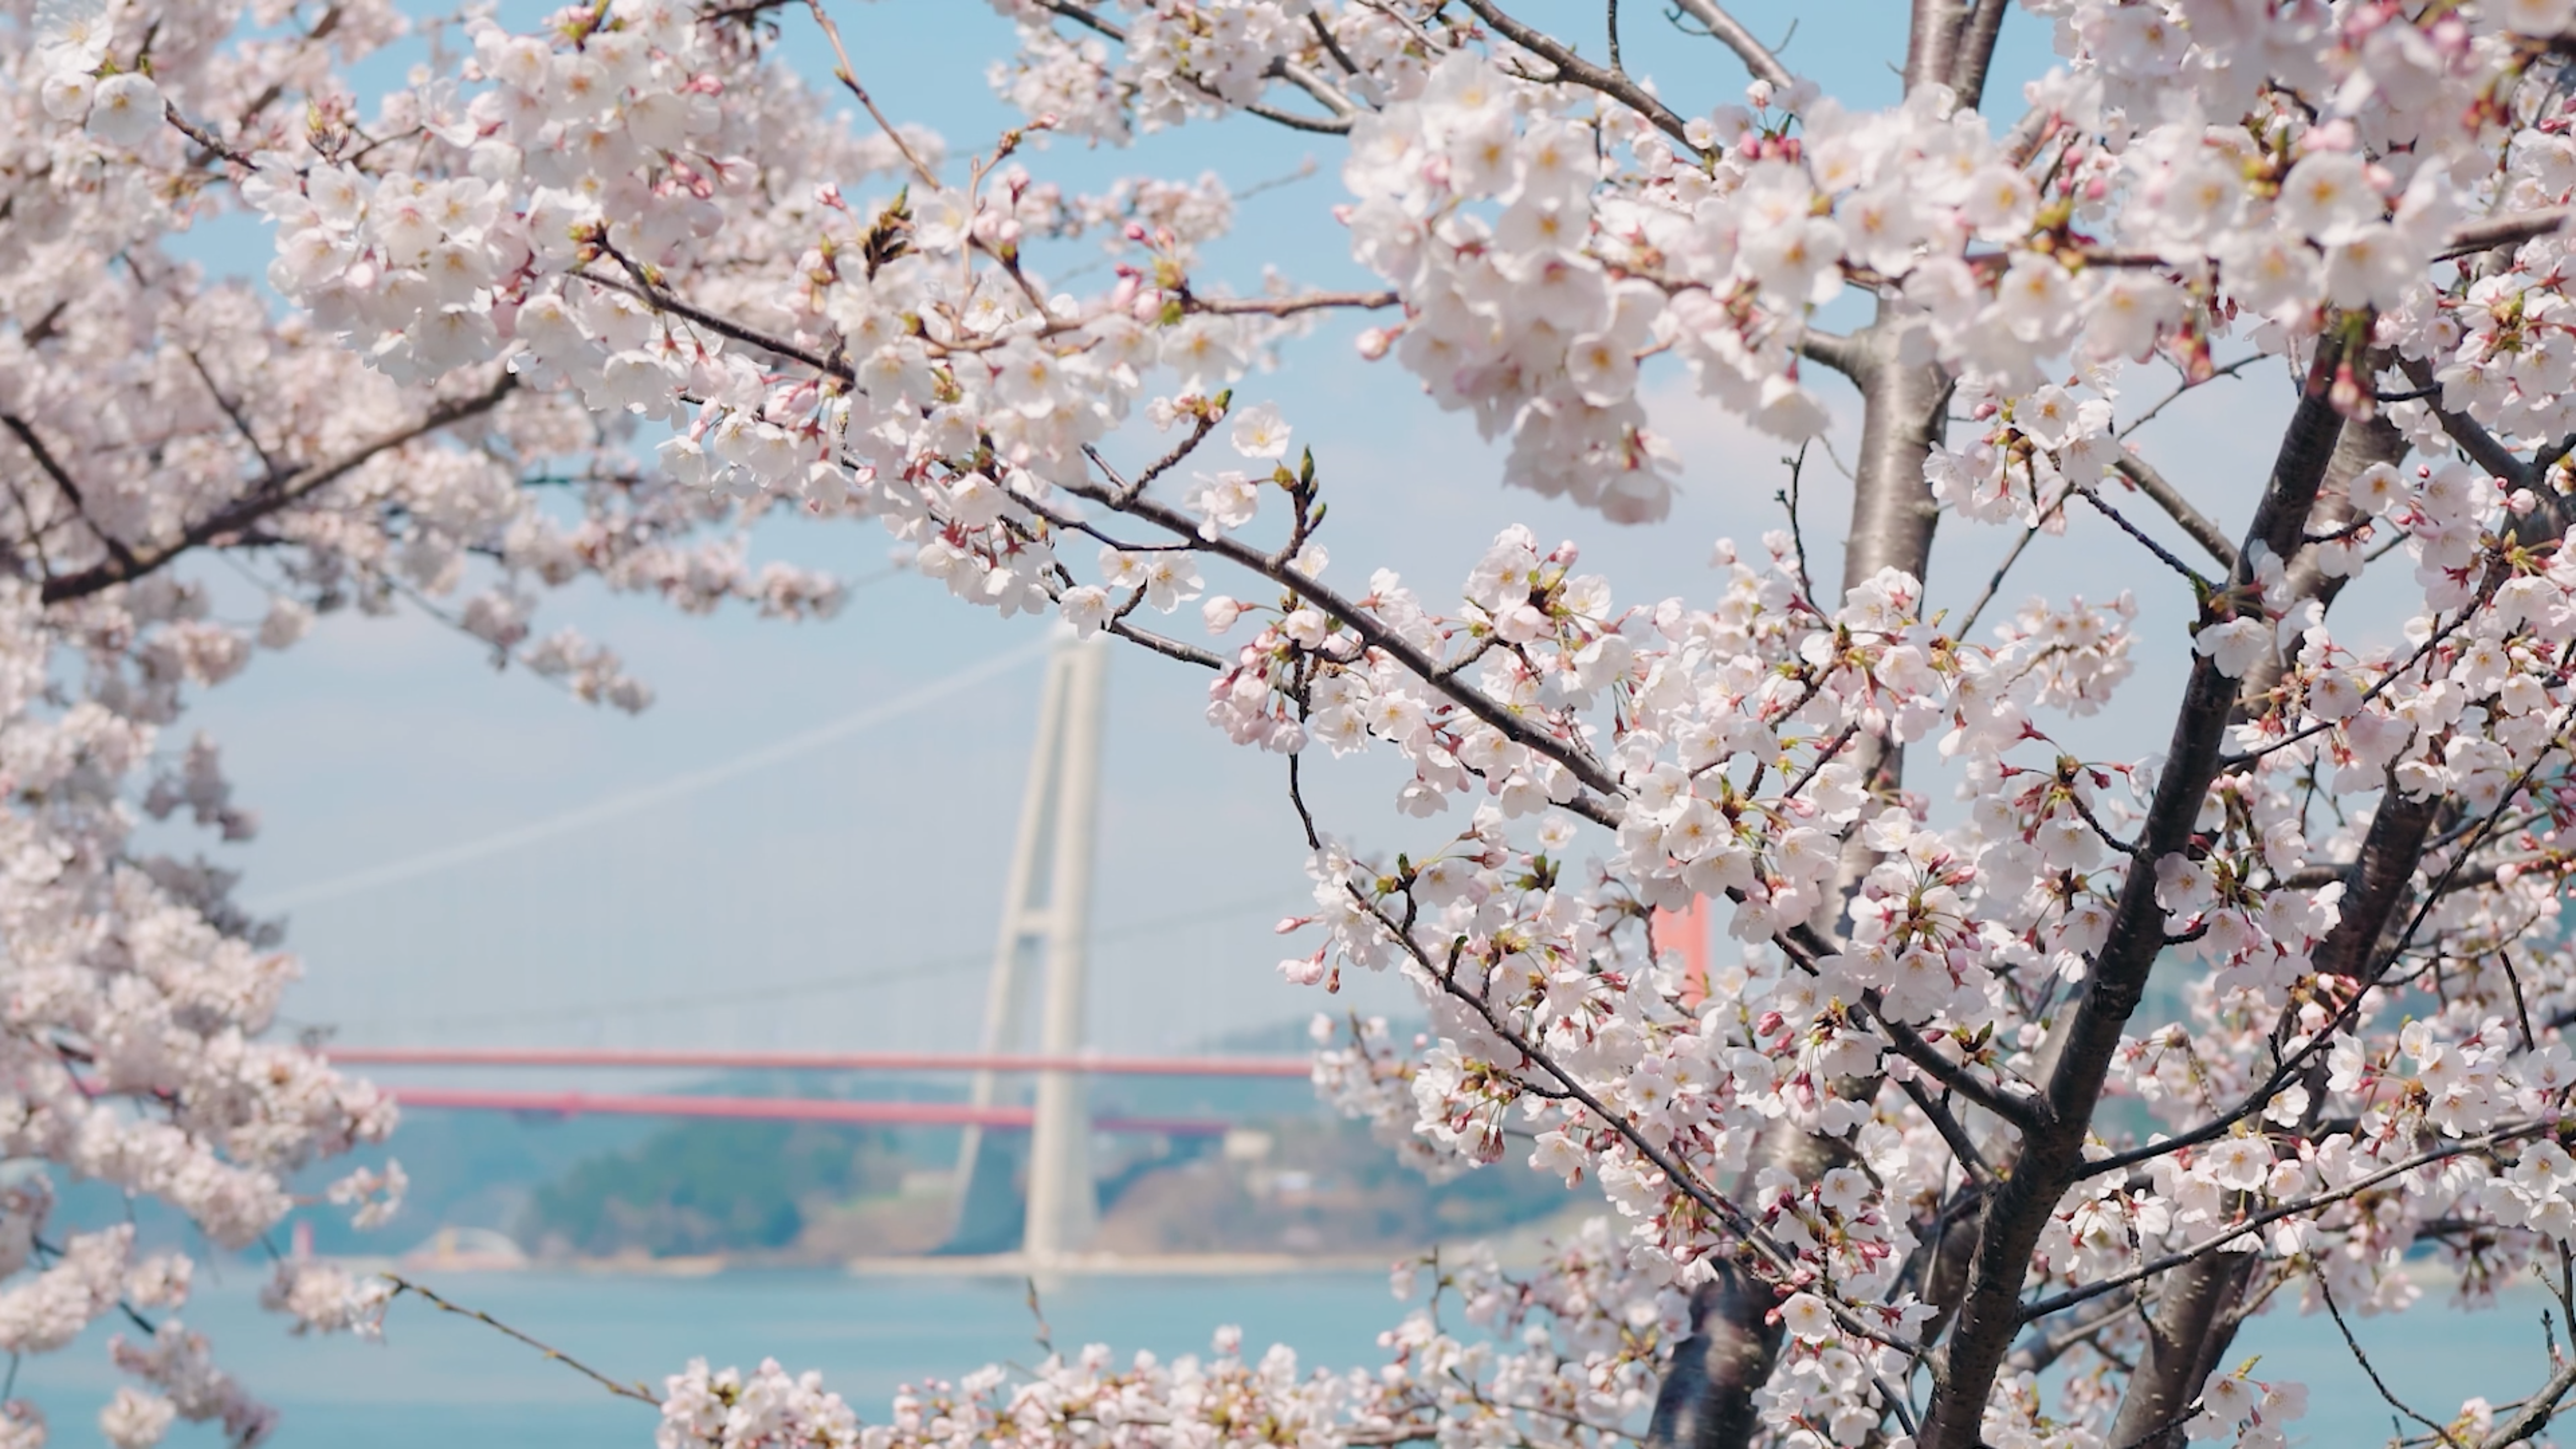 Cherry Blossom by the Sea